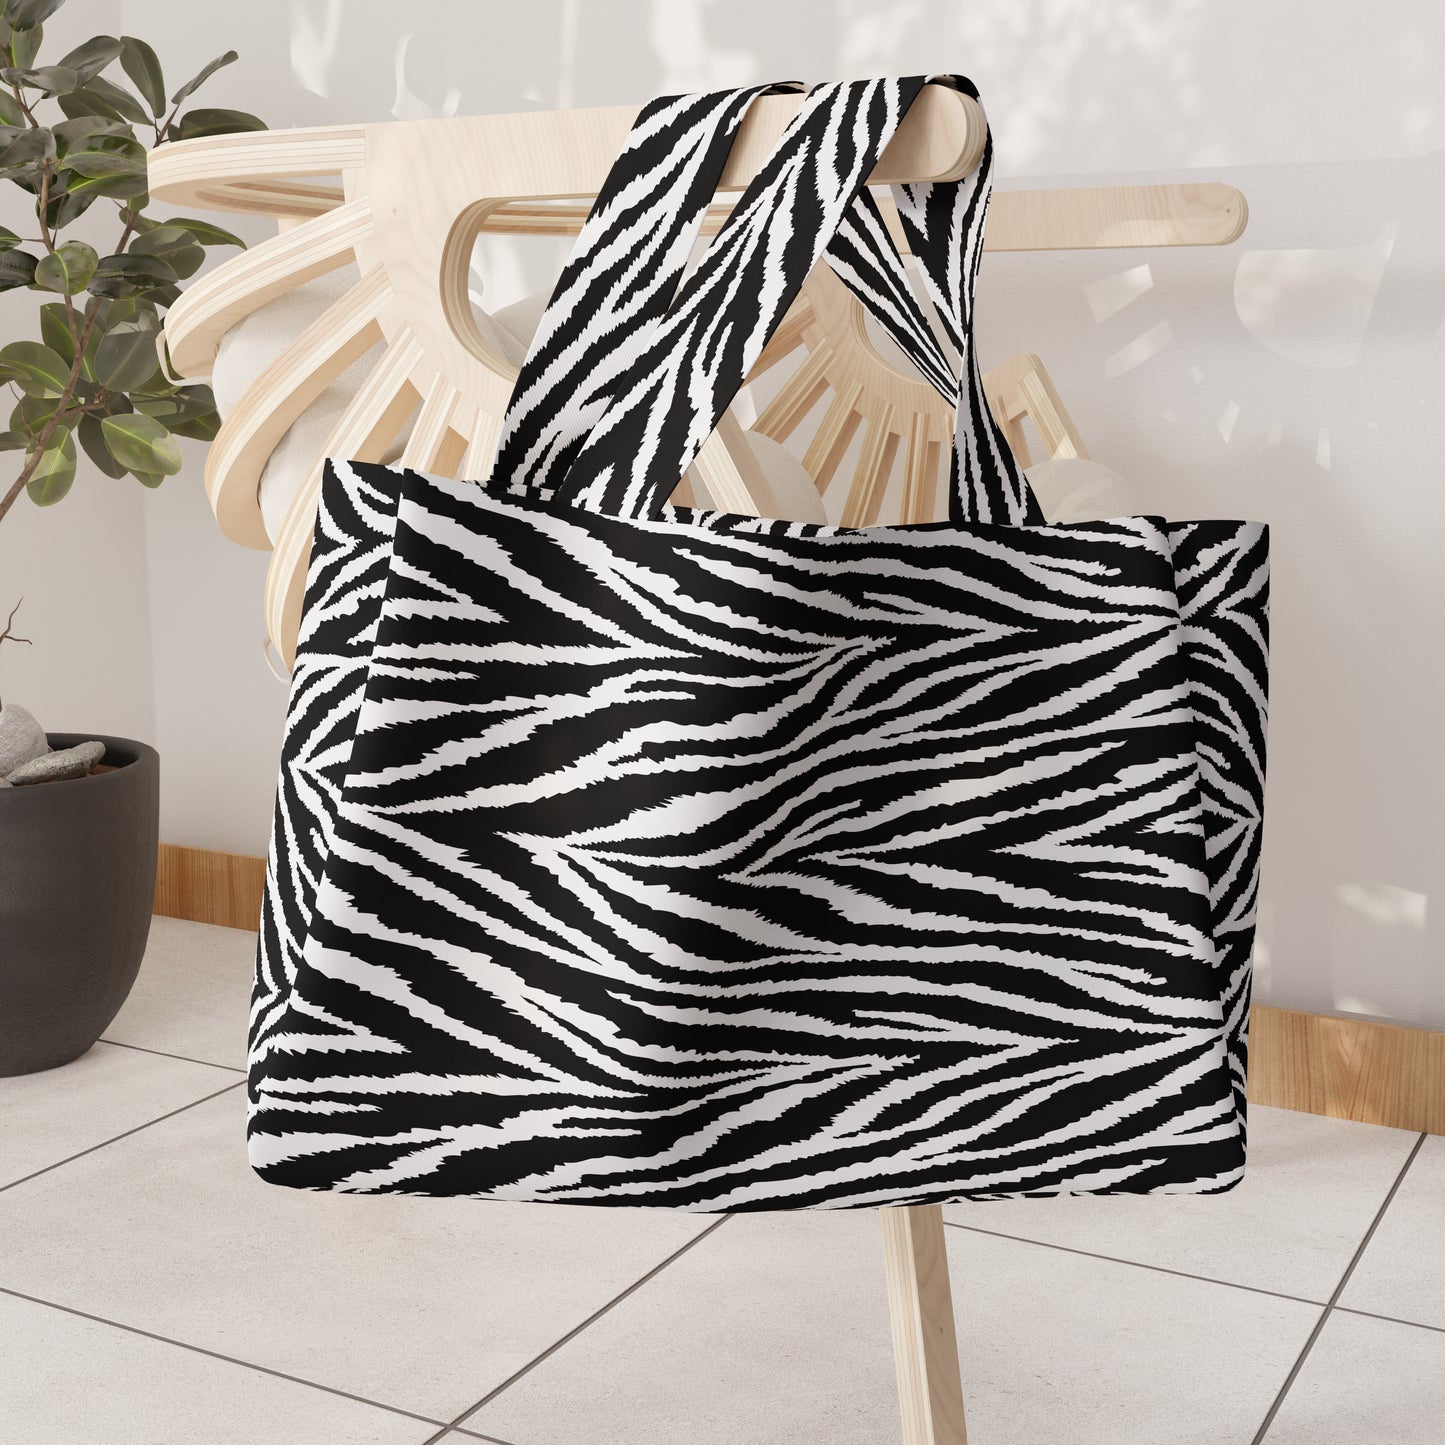 Women's Sea Bag, Beach Bag, Microfiber Sea Bag, Zebra